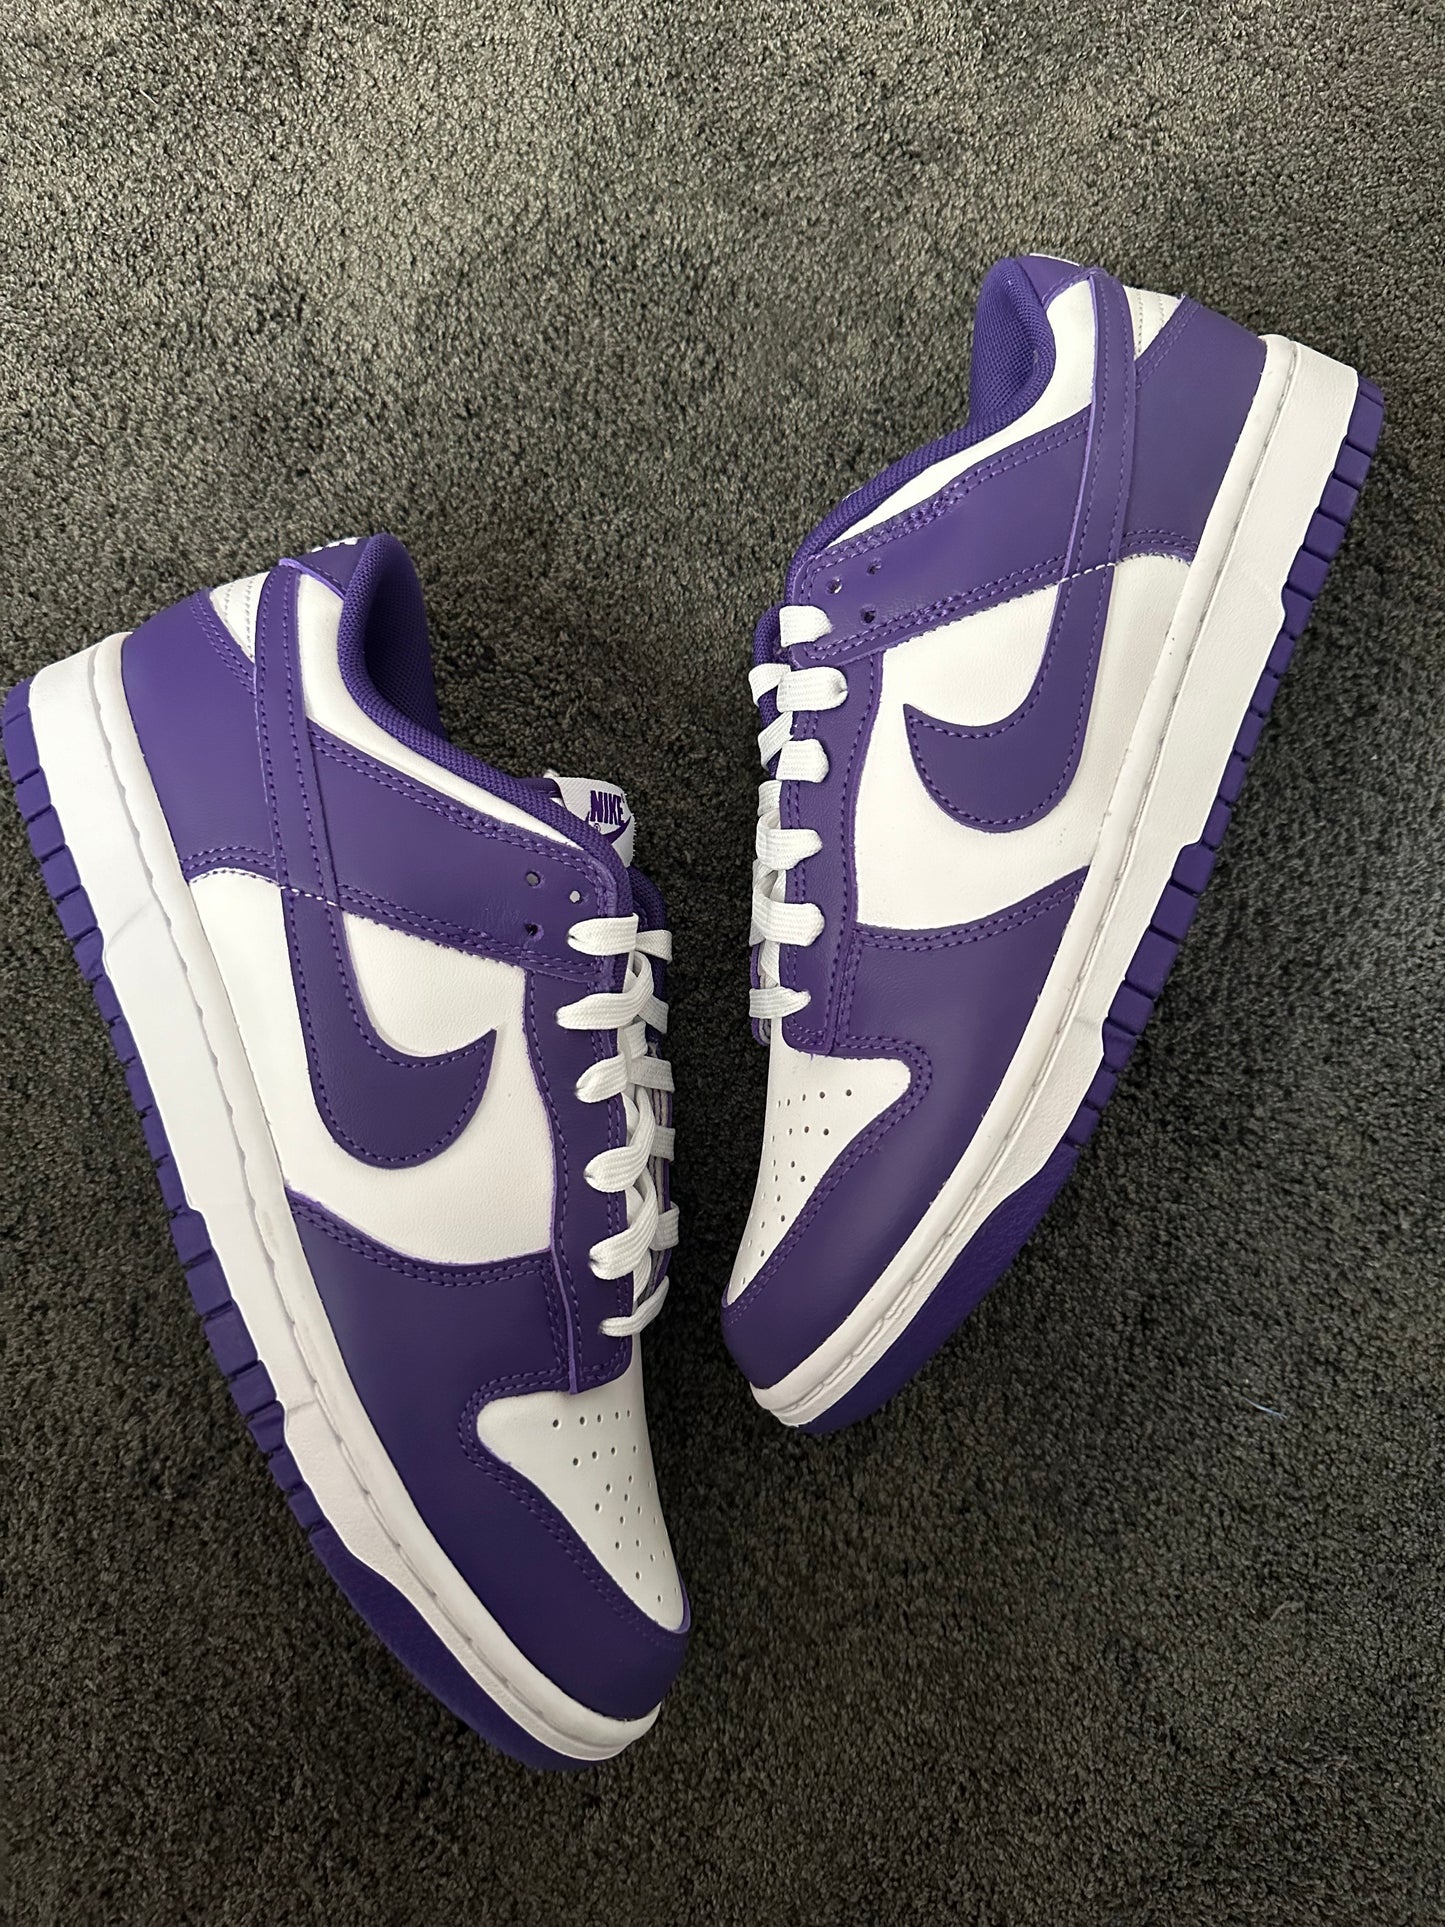 Nike Dunk low - Championship Purple